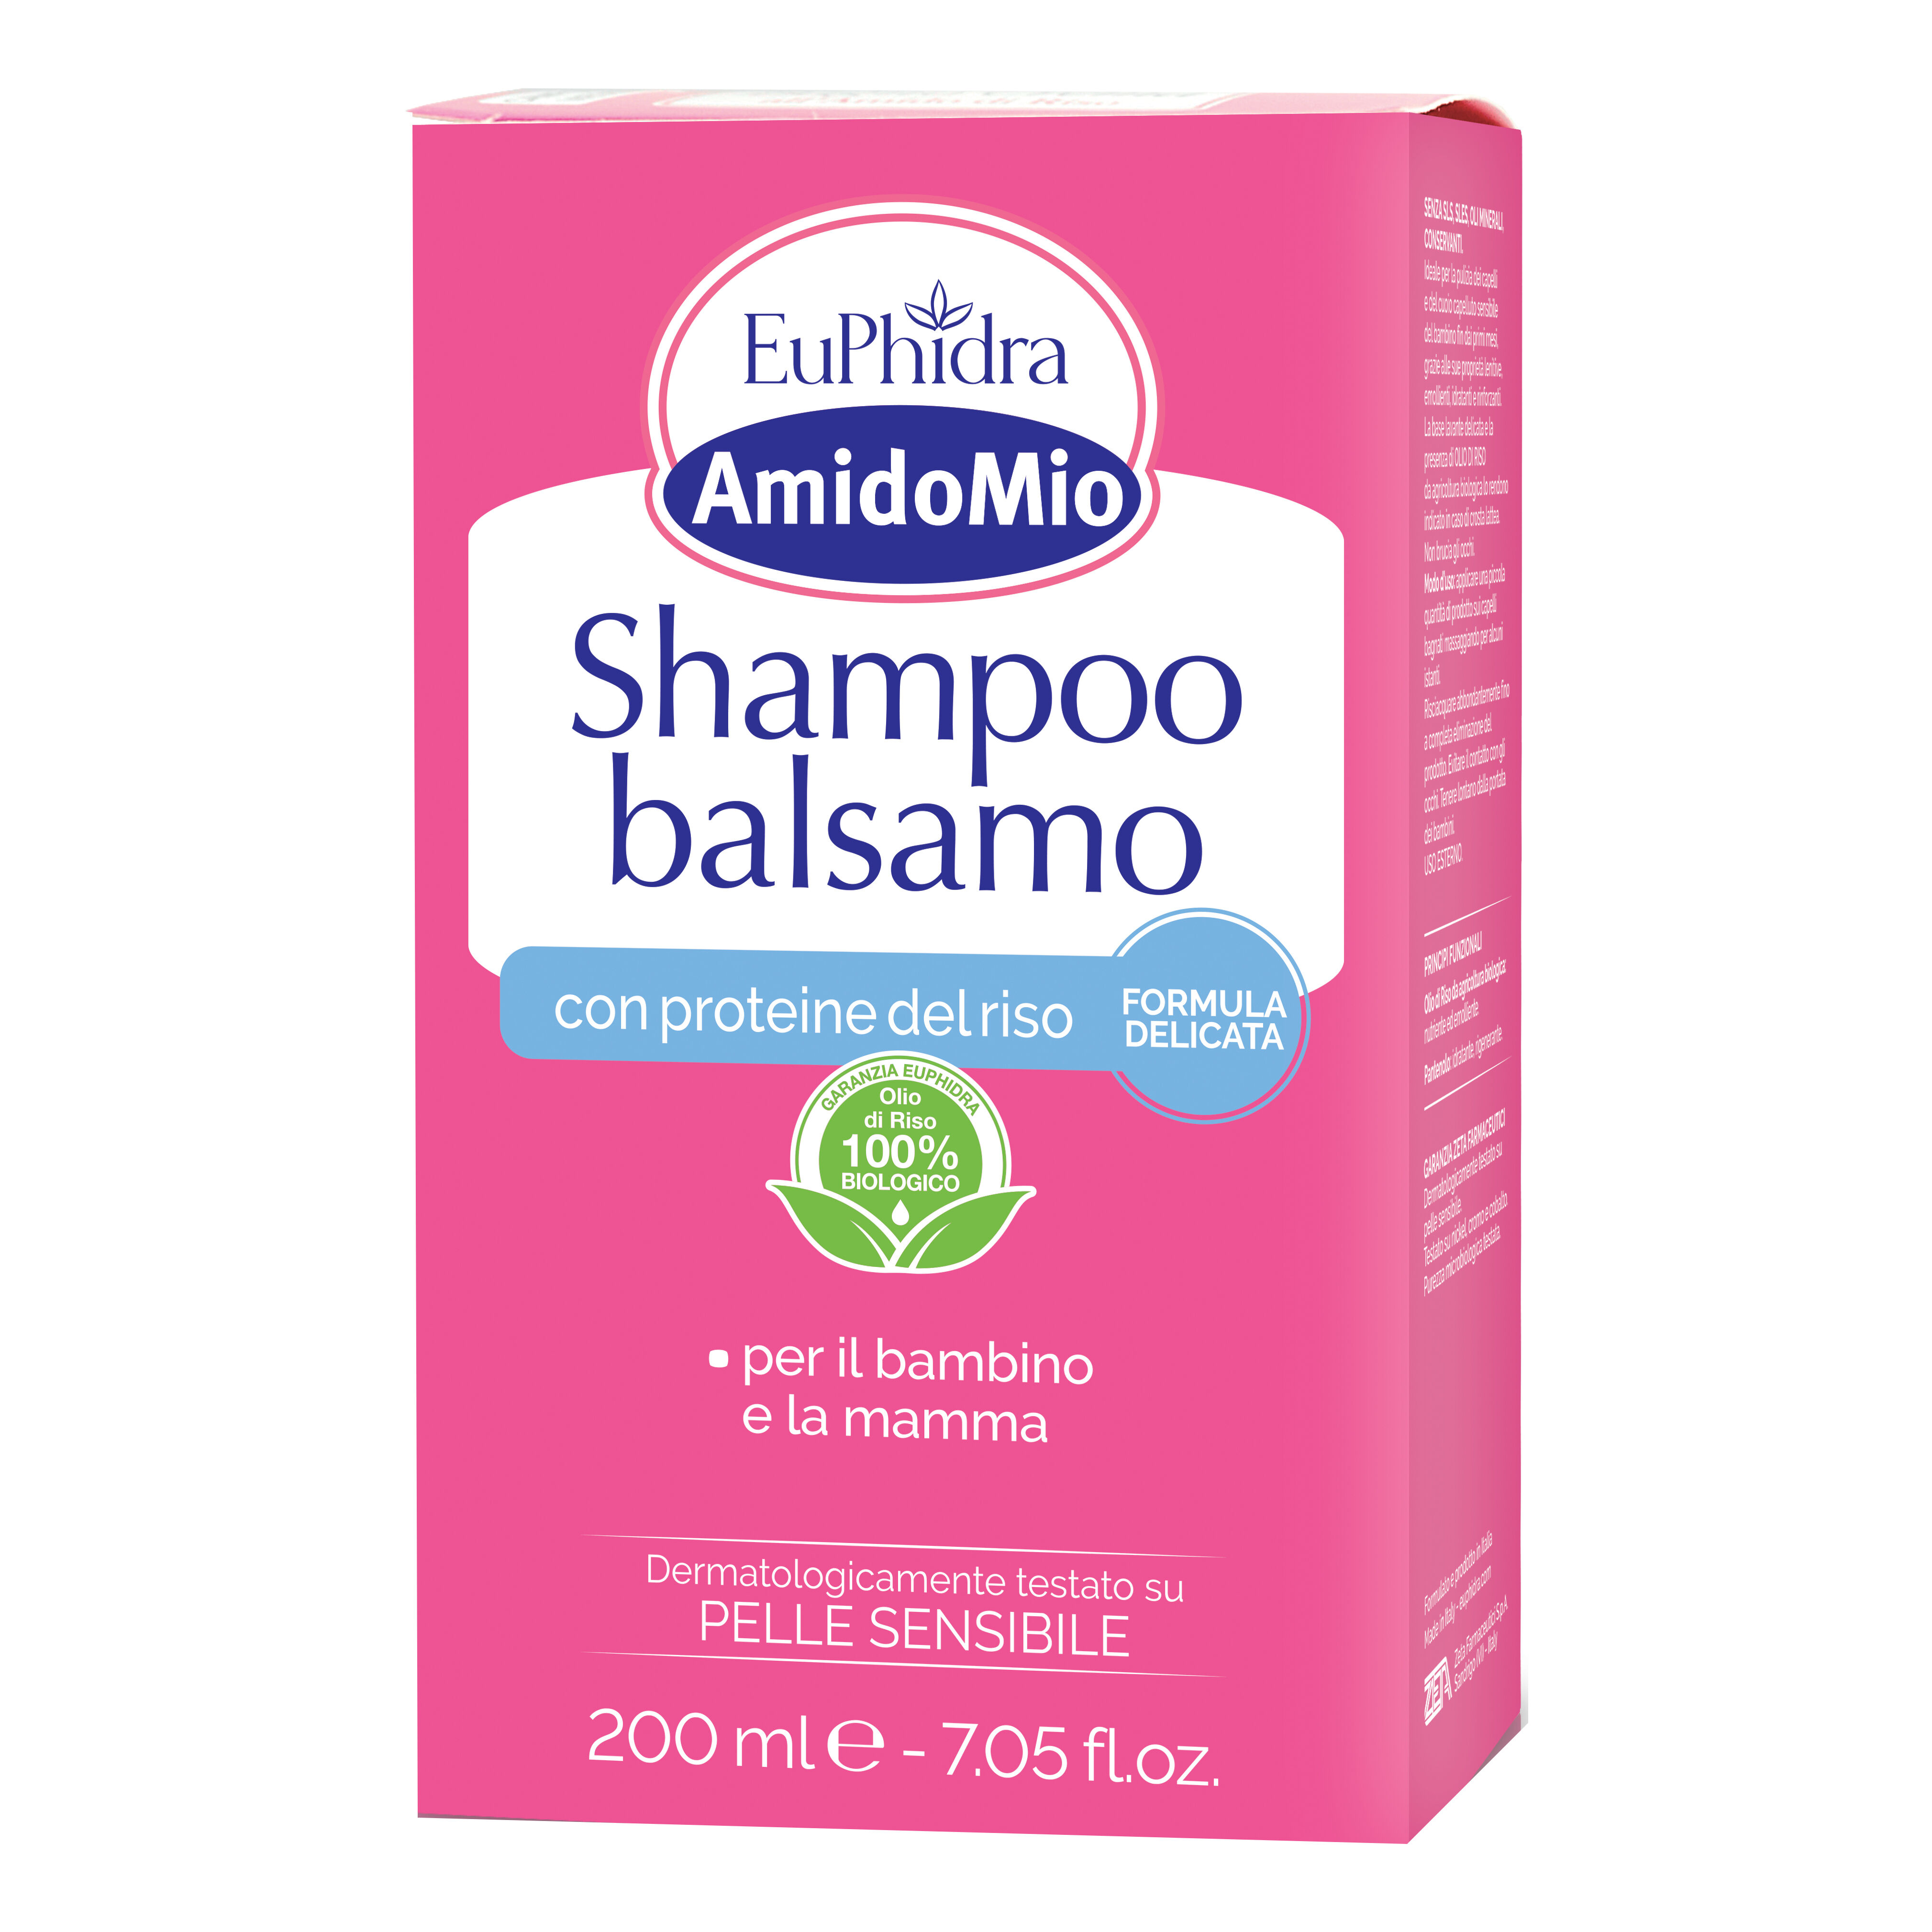 Zeta Farmaceutici Spa Euphidra Amidomio Shampoo Balsamo